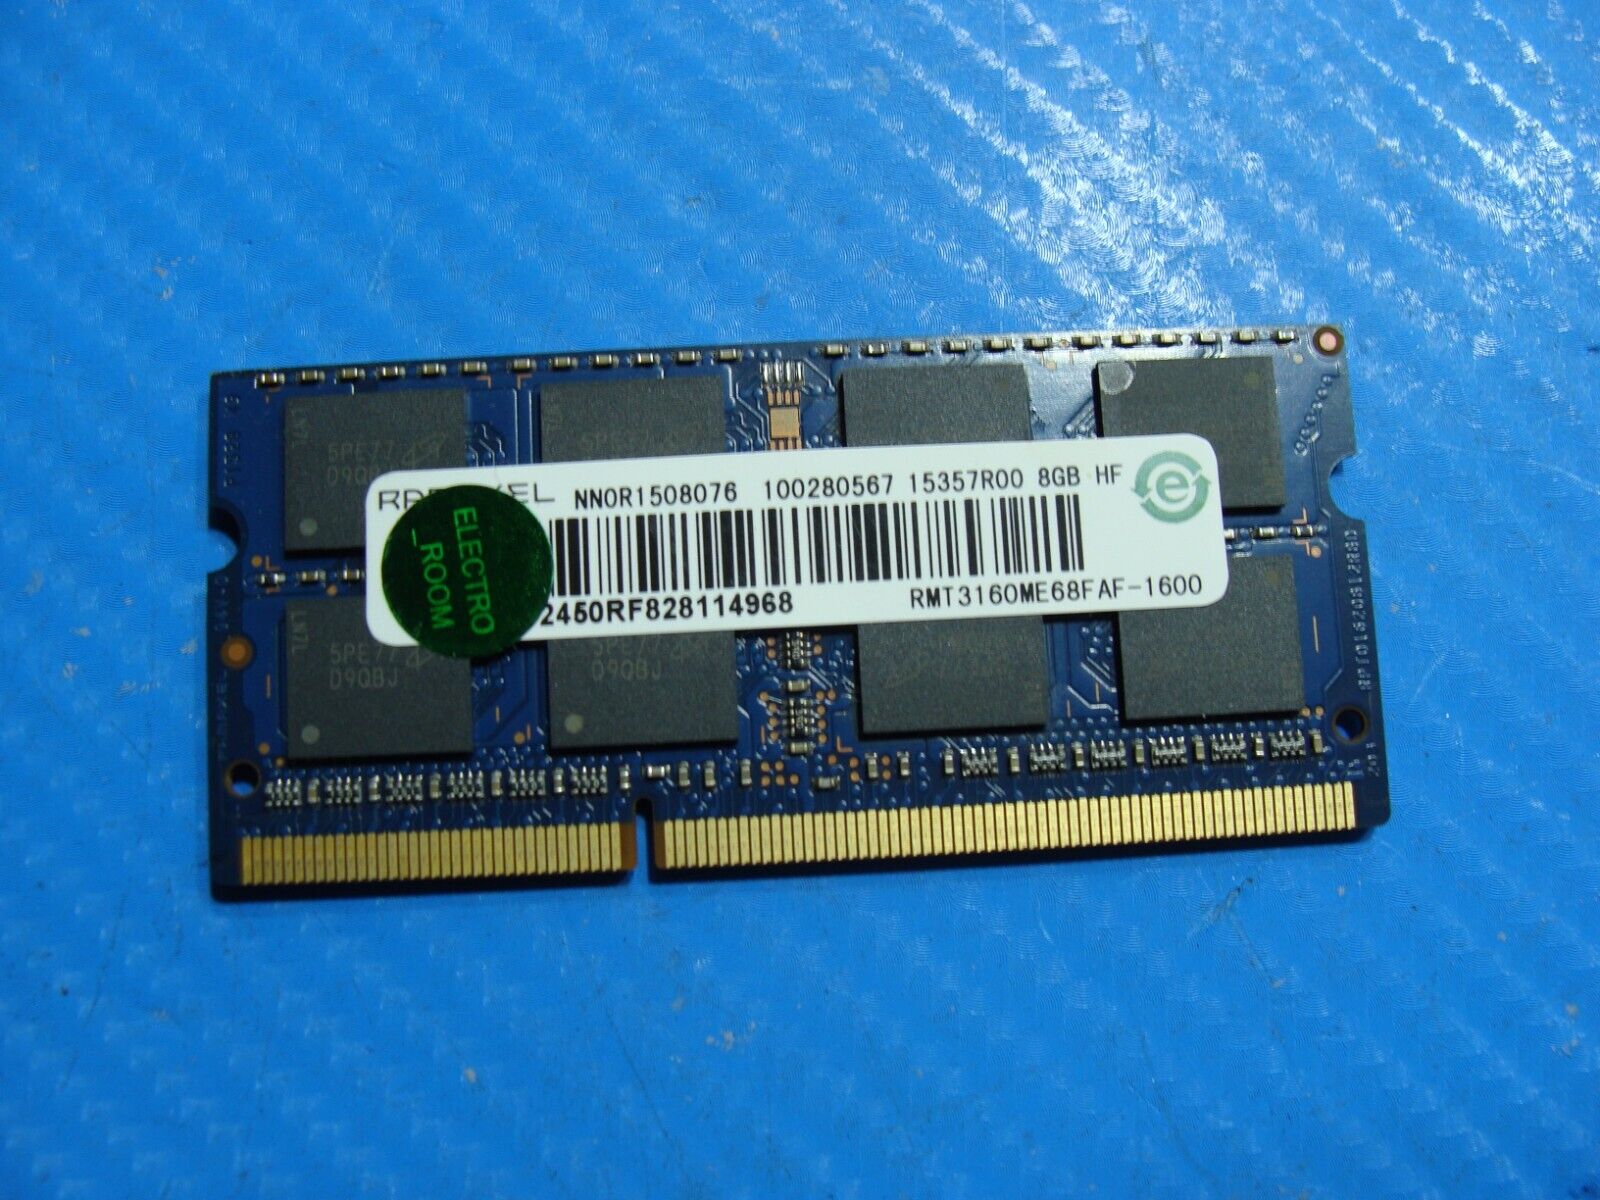 Lenovo Yoga 3 14 Ramaxel 8GB SO-DIMM Memory RAM RMT3160ME68FAF-1600